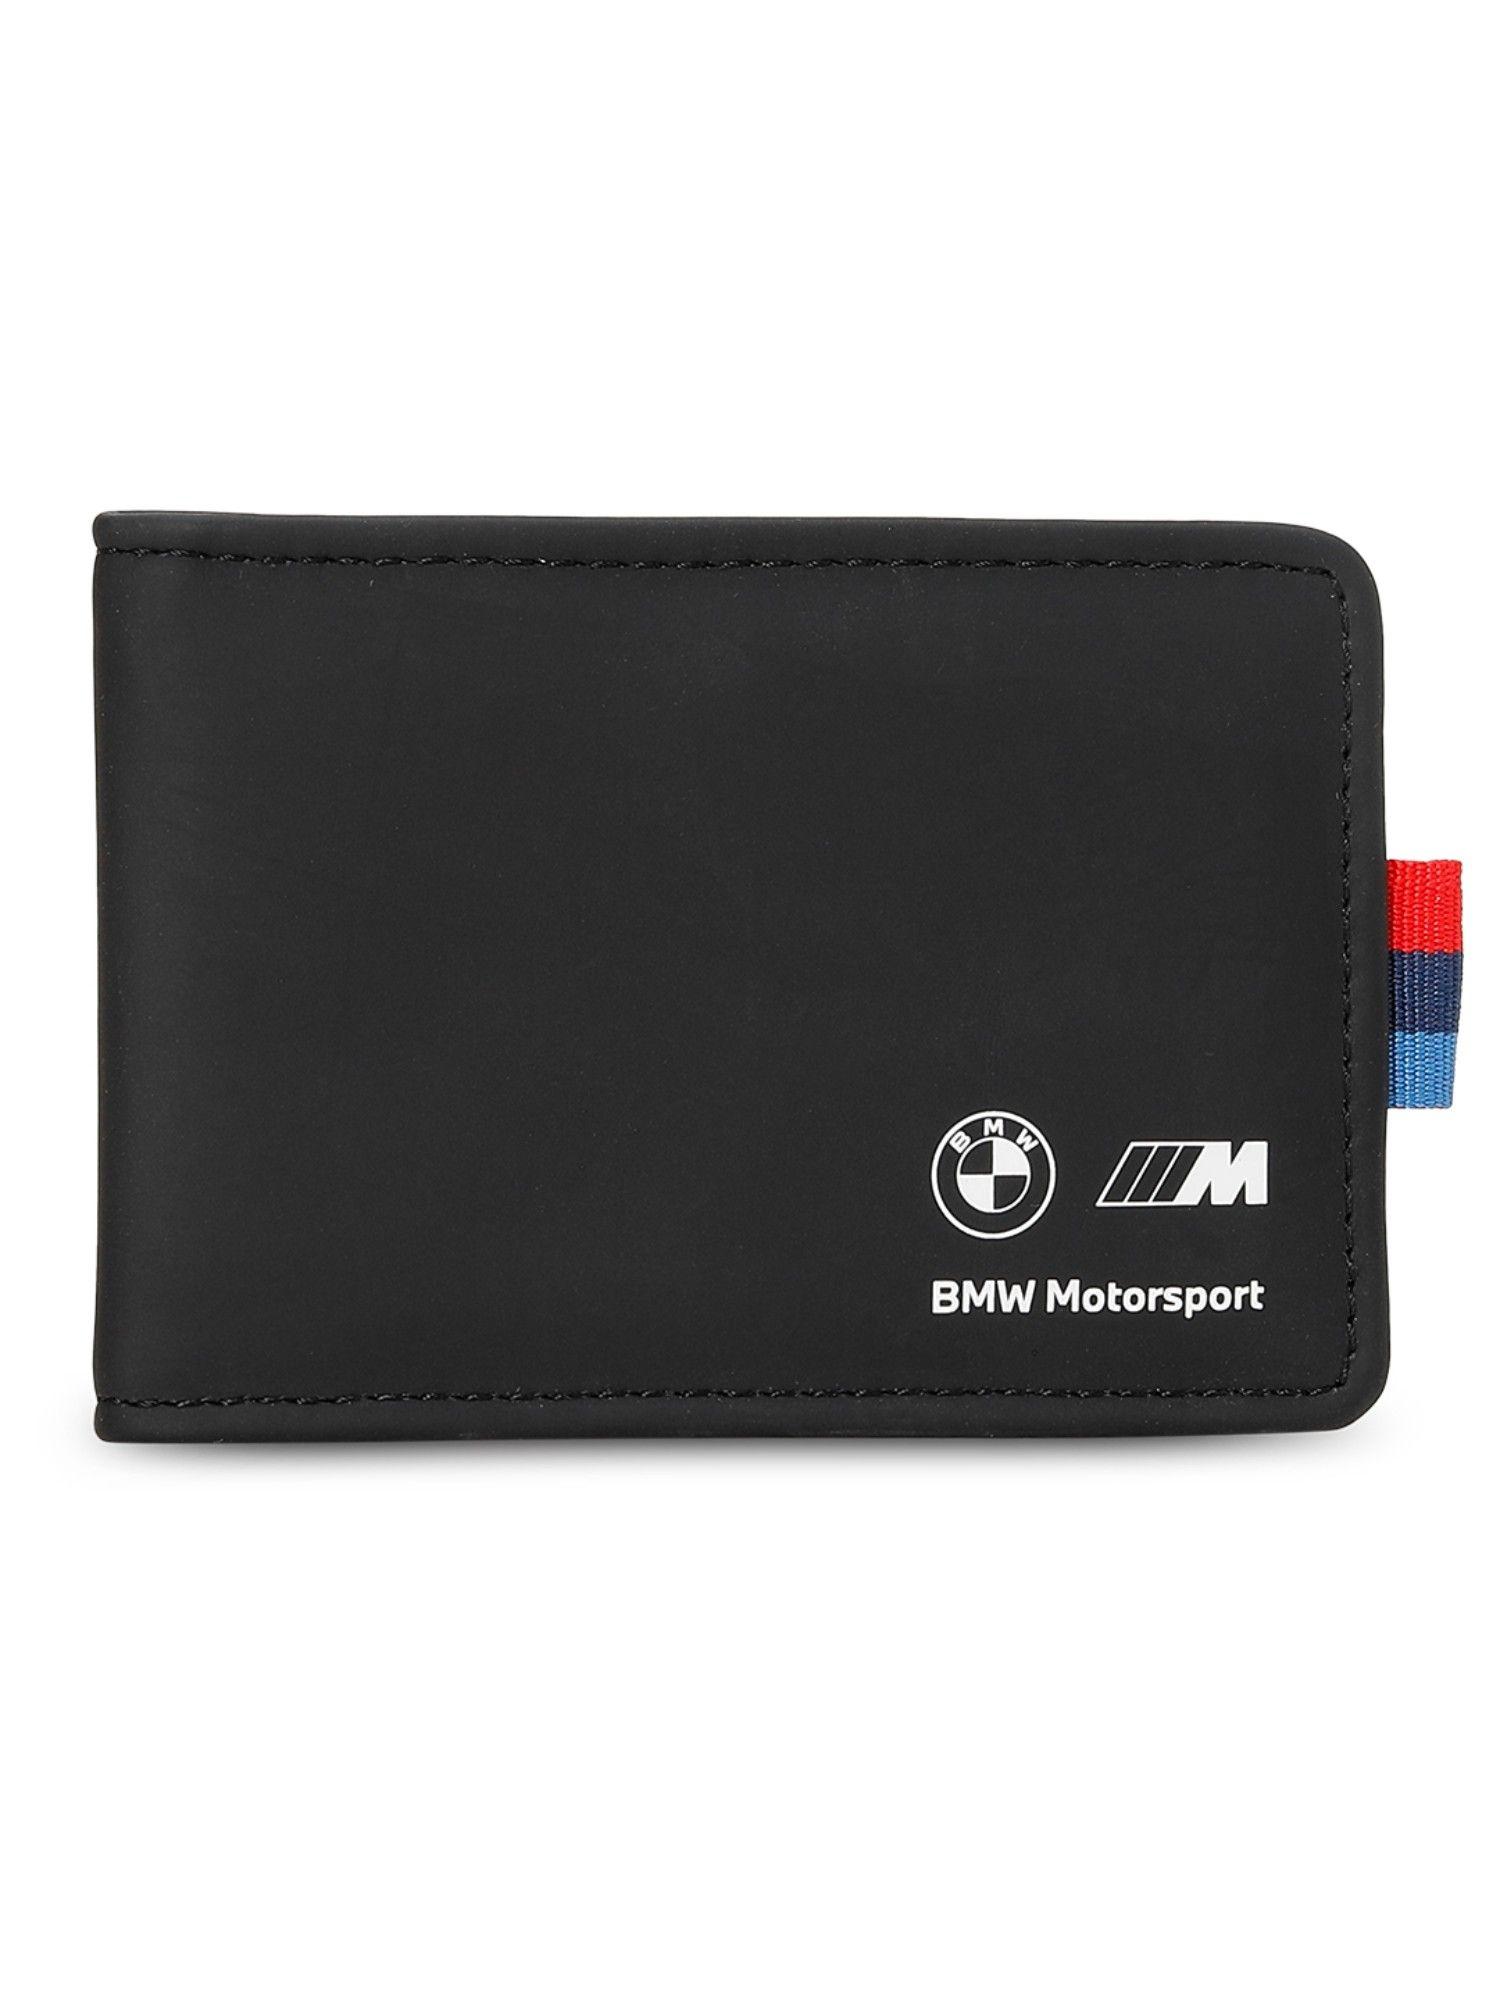 bmw mms small black wallet